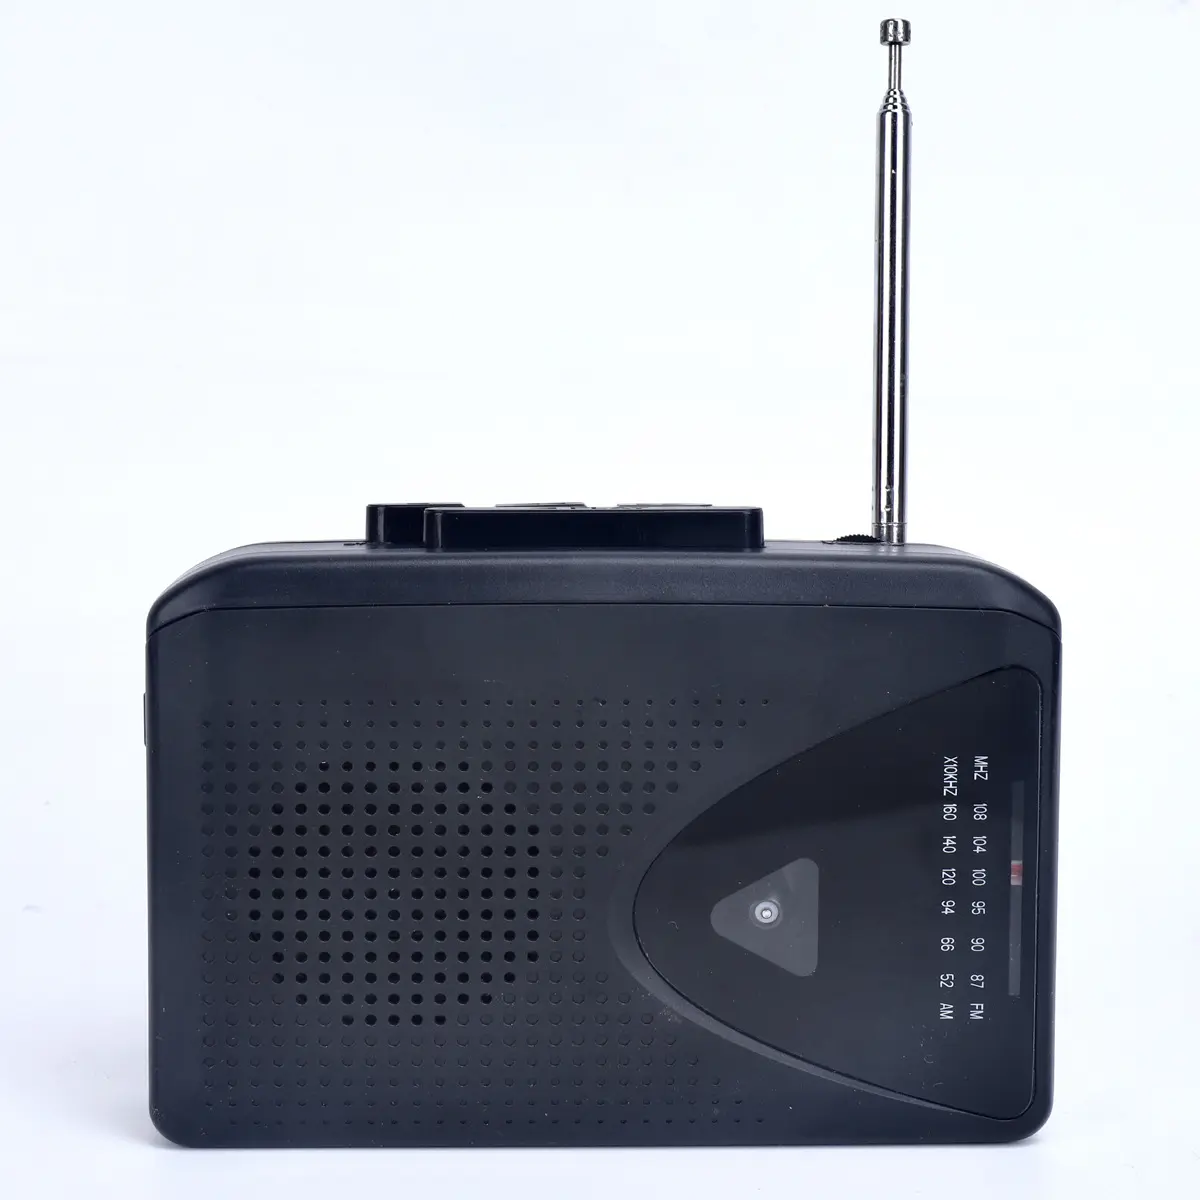 Reproductor de Cassette portátil para auriculares, Radio FM, AM, dos bandas con sonido estéreo, 3,5mm, de fábrica